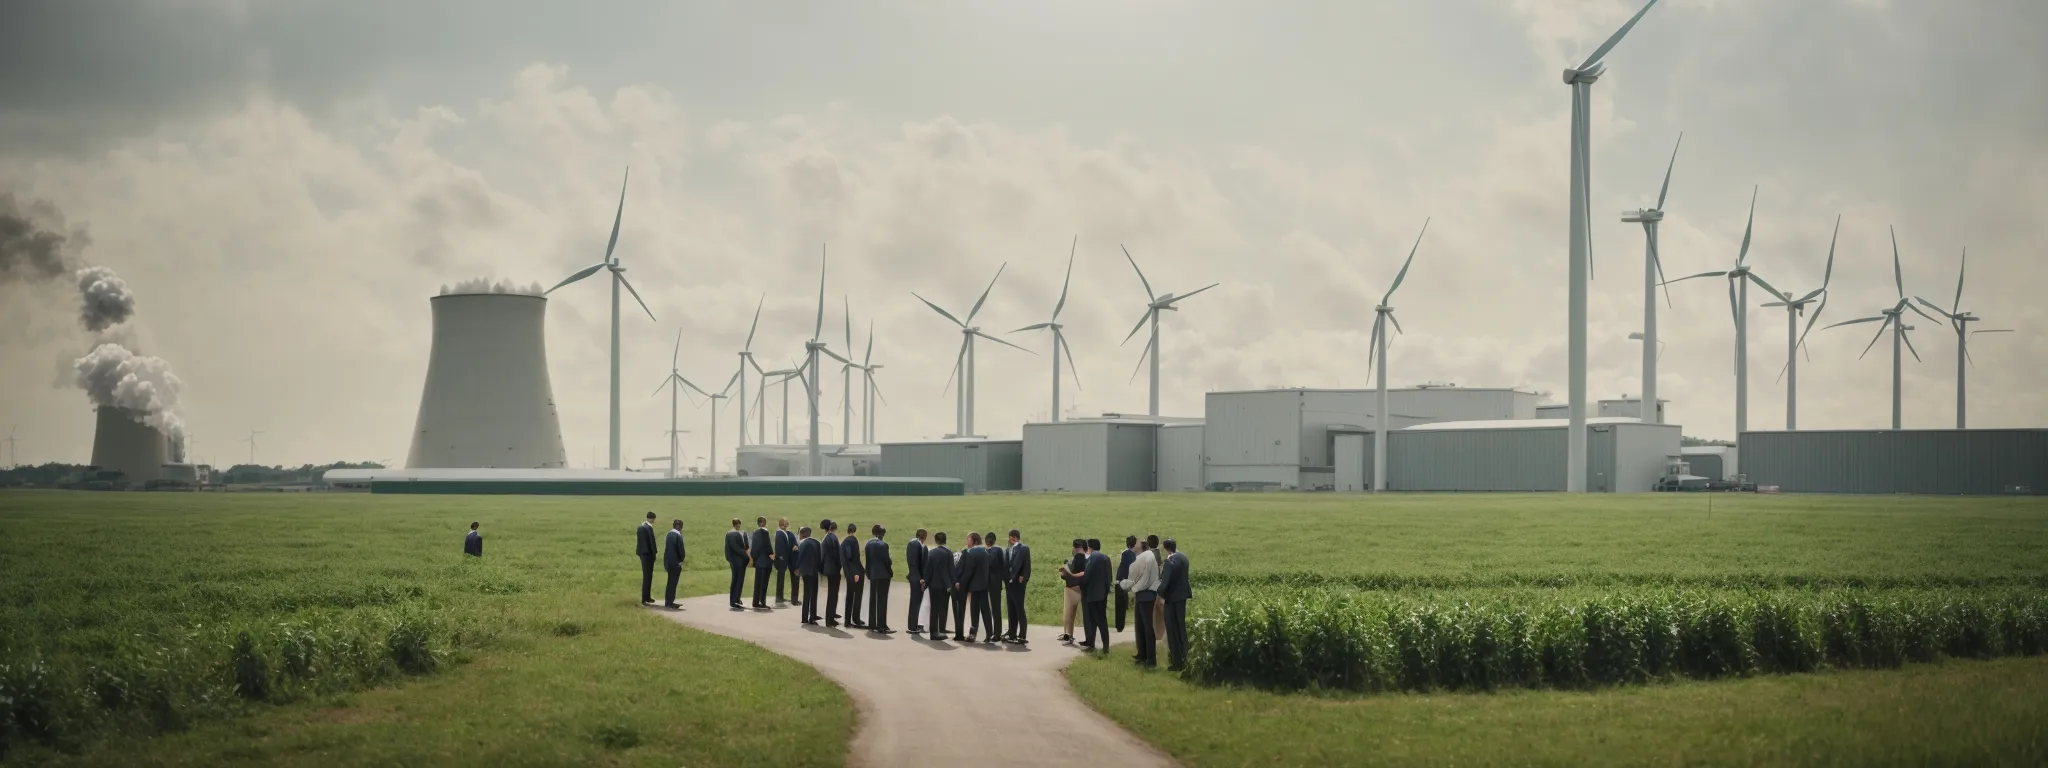 executives shaking hands at a green energy facility, symbolizing a sustainable partnership.